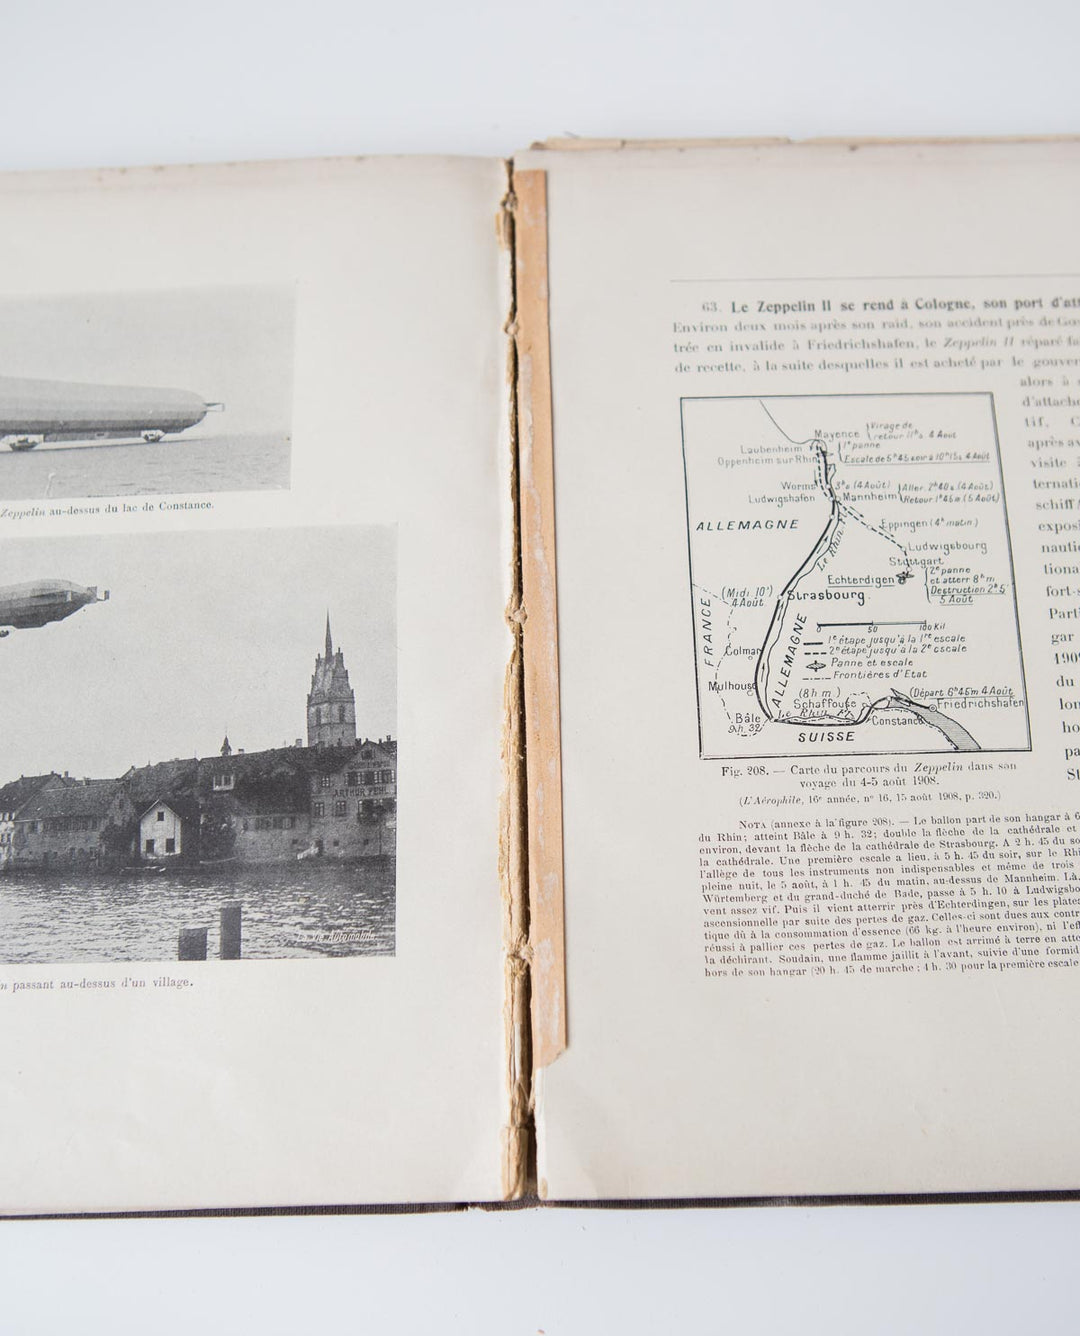 Libro historia de la aviación 1910 L’Épopée Aérienne de L. Marchis (VENDIDO)